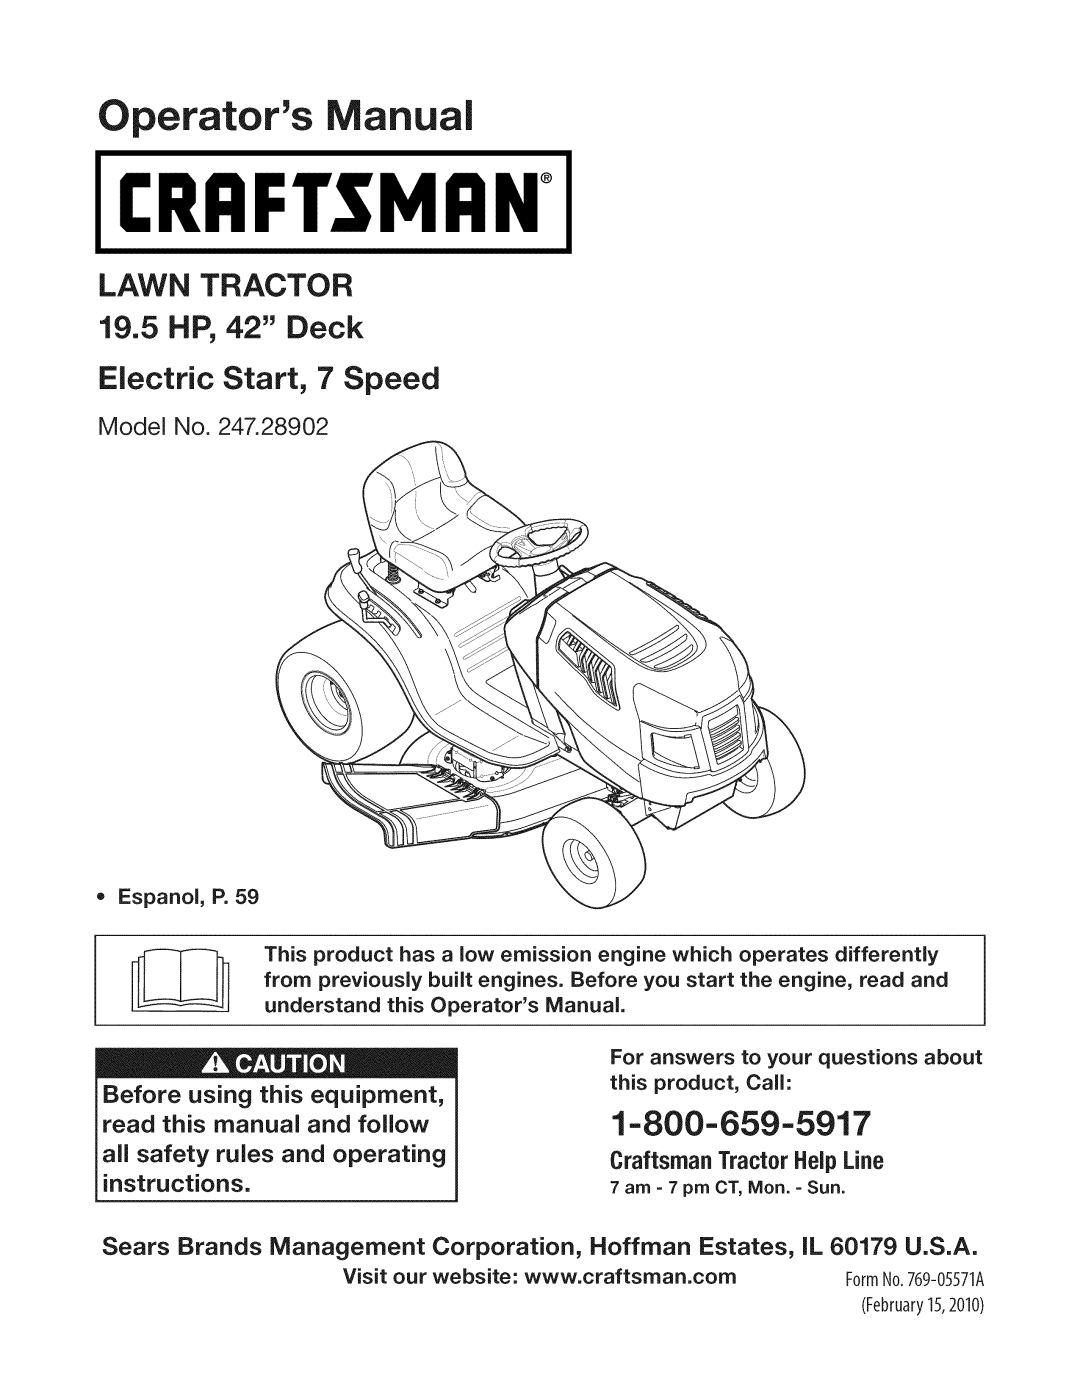 Craftsman 247.28902 manual perators, I:RnFrSMRN, 1-800=659=5917, Lawn Tractor, 19.5 HI ,42 Deck, Electric Start, 7 Speed 